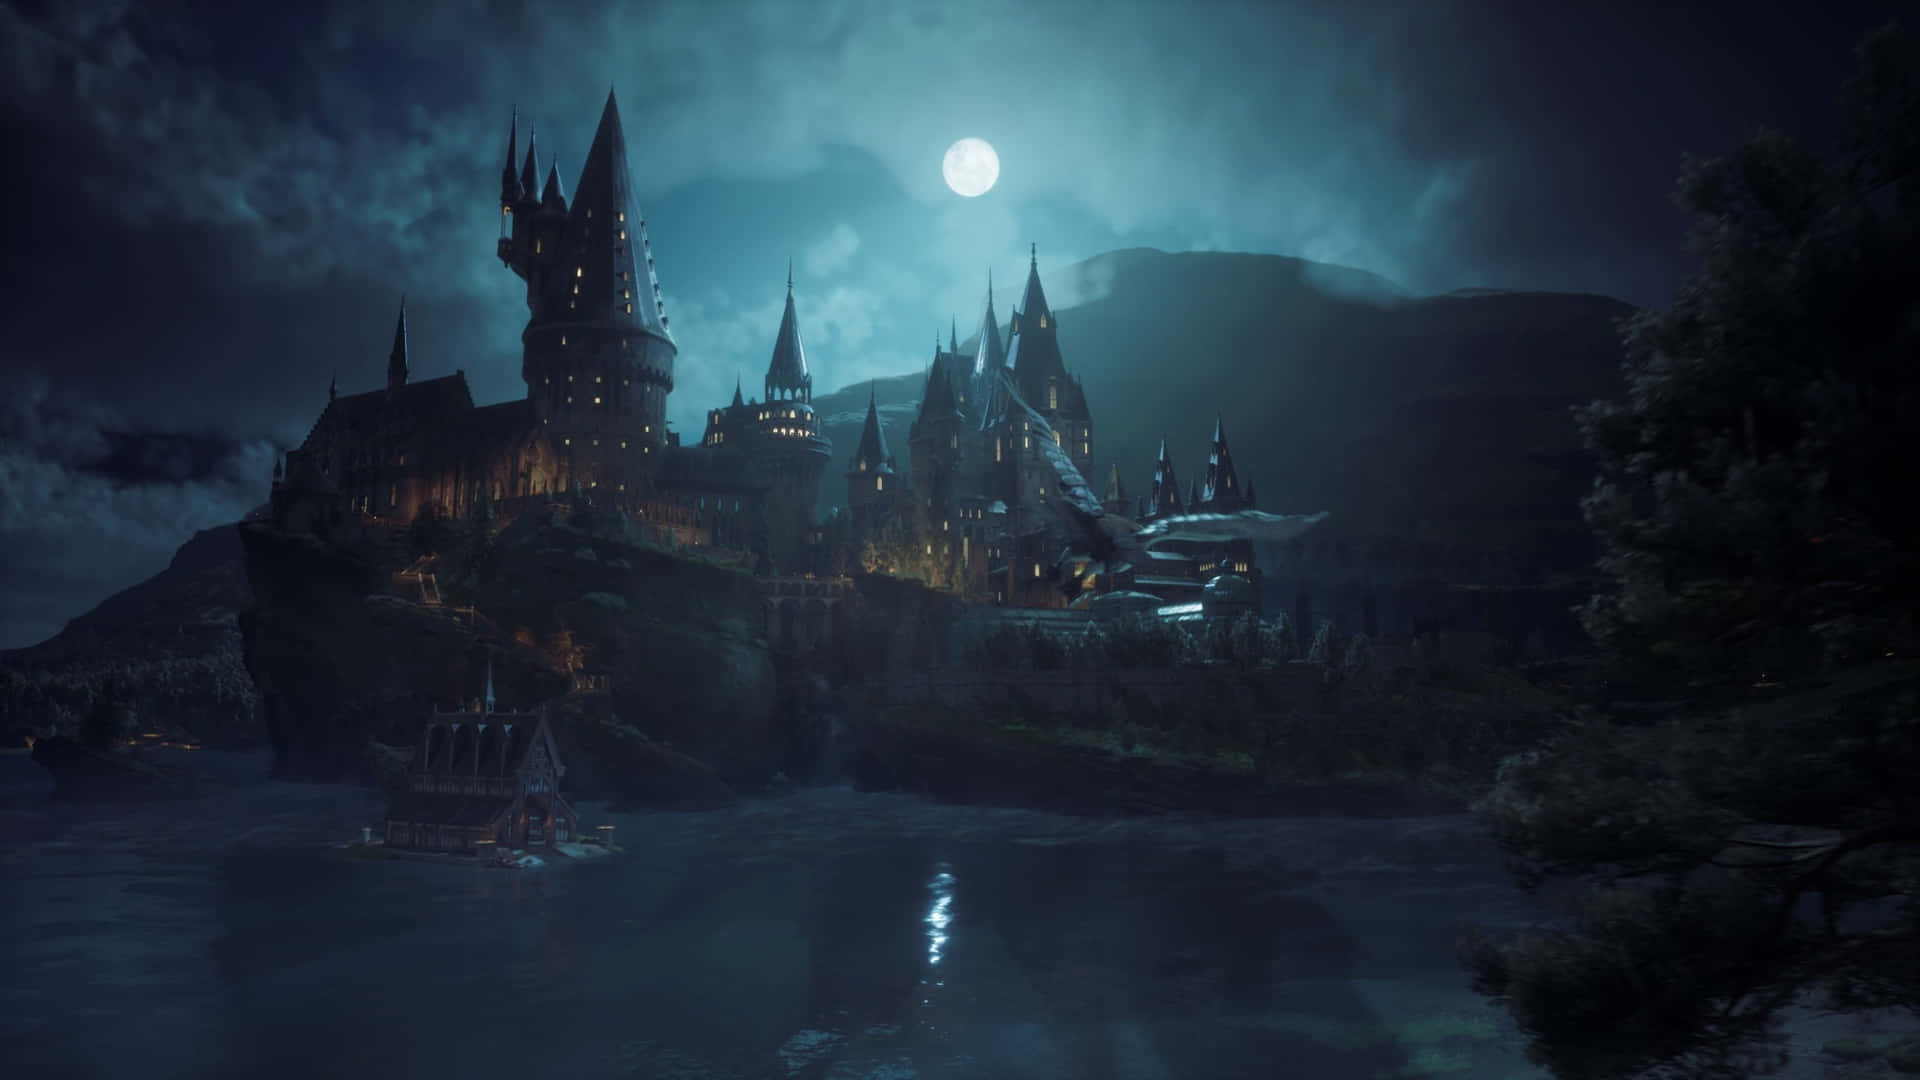 Explore the mystical world of Hogwarts